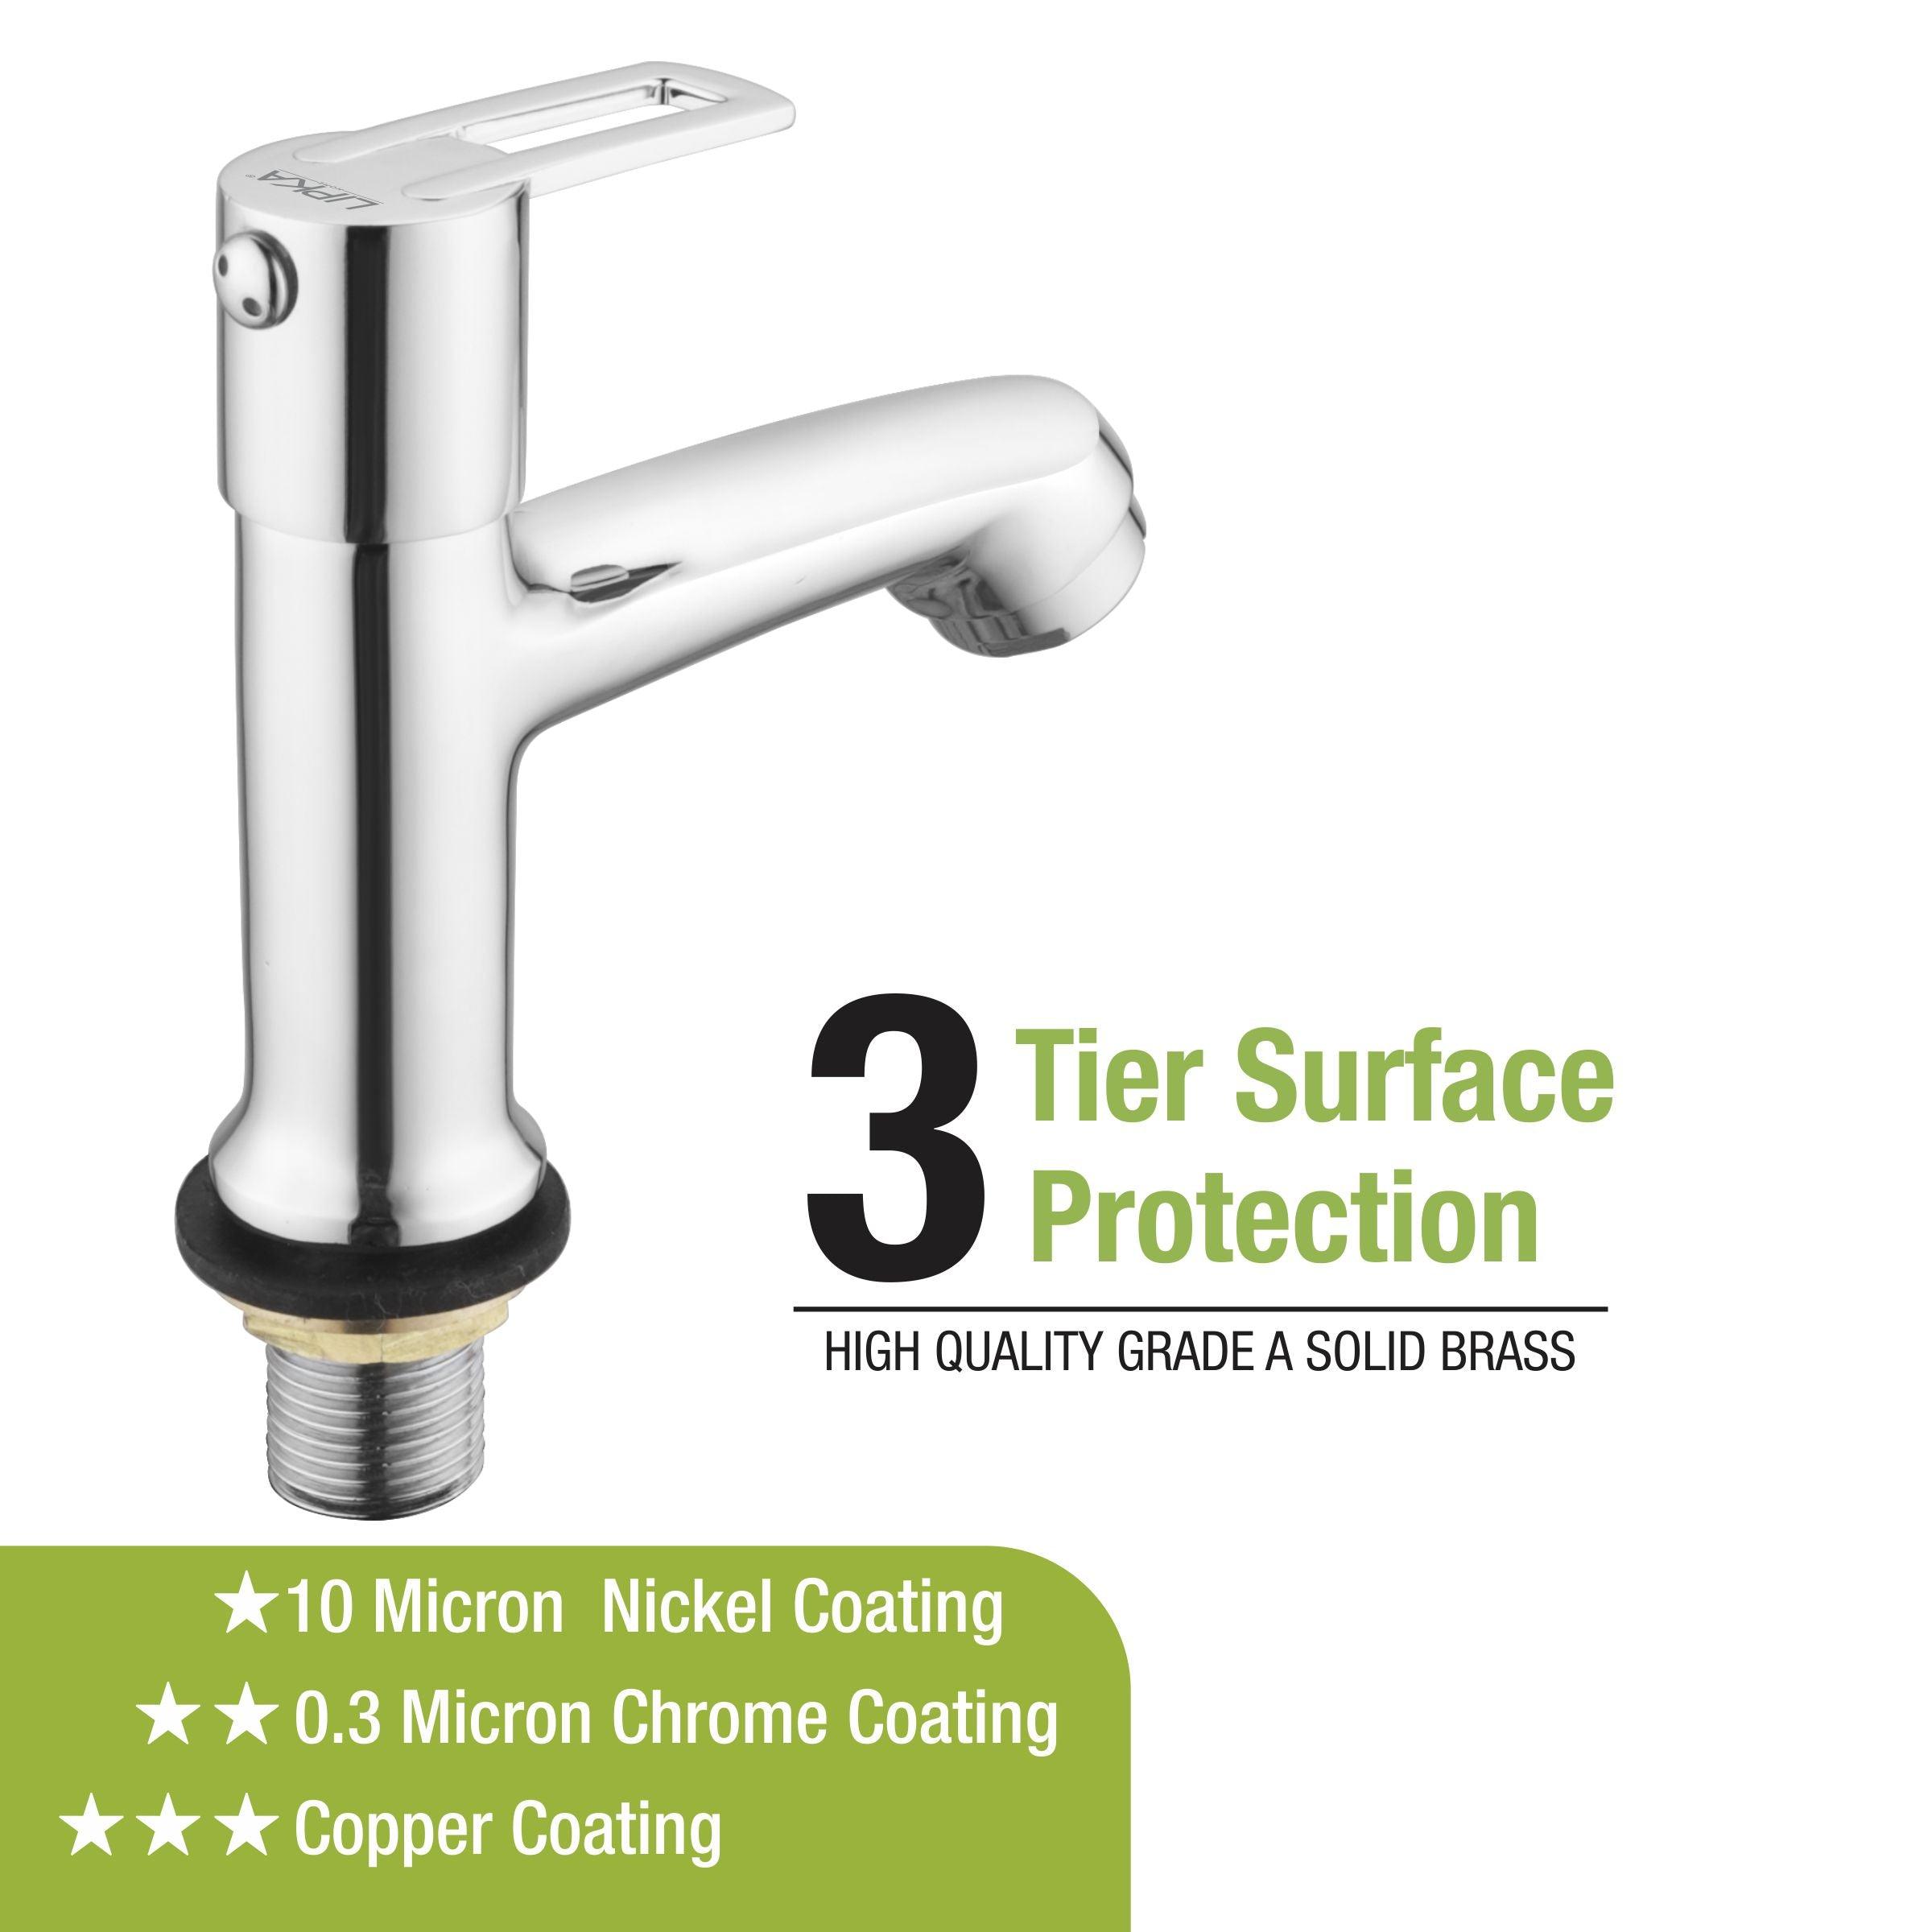 Kube Pillar Tap Brass Faucet 3 tier surface protection